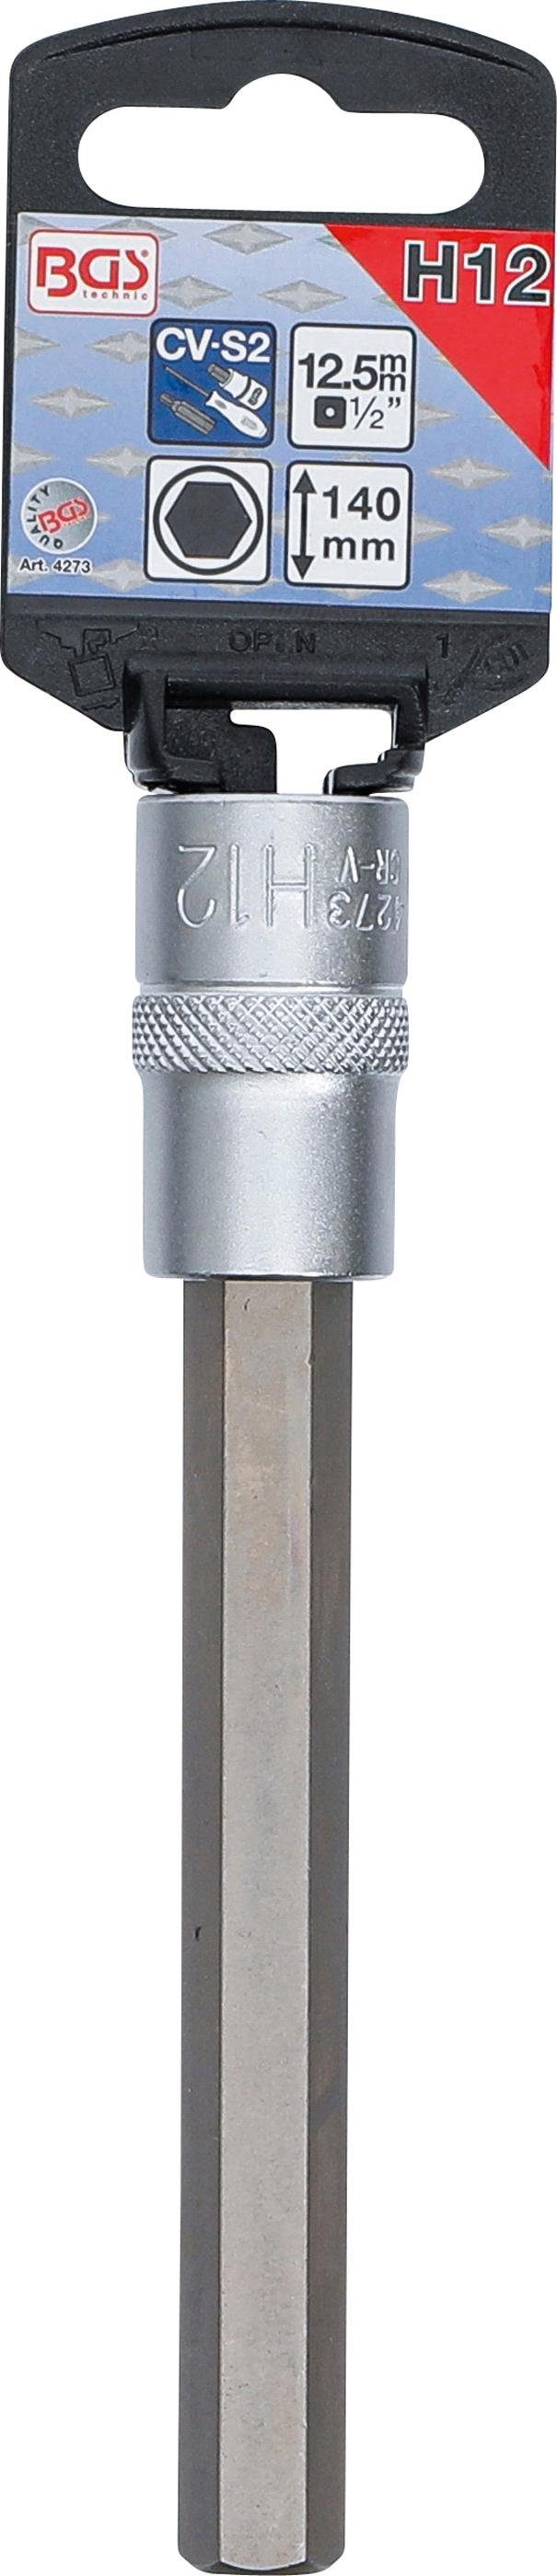 Antrieb Innensechskant technic mm Bit-Einsatz, Sechskant-Bit Innenvierkant 12,5 mm, Länge BGS 12 (1/2), 140 mm